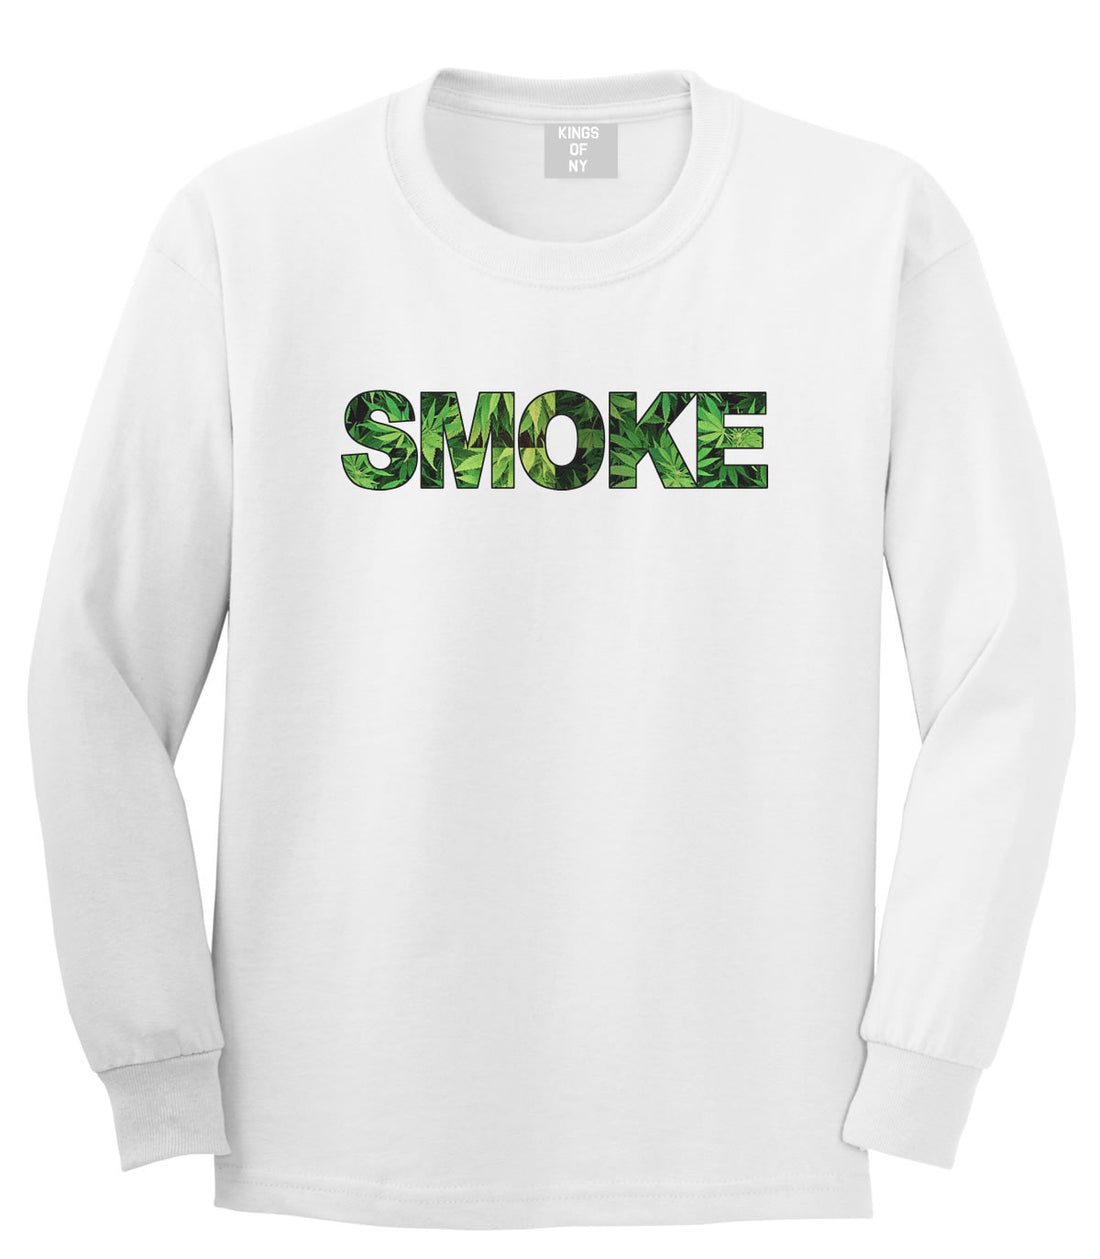 Smoke Weed Marijuana Print Boys Kids Long Sleeve T-Shirt in White by Kings Of NY